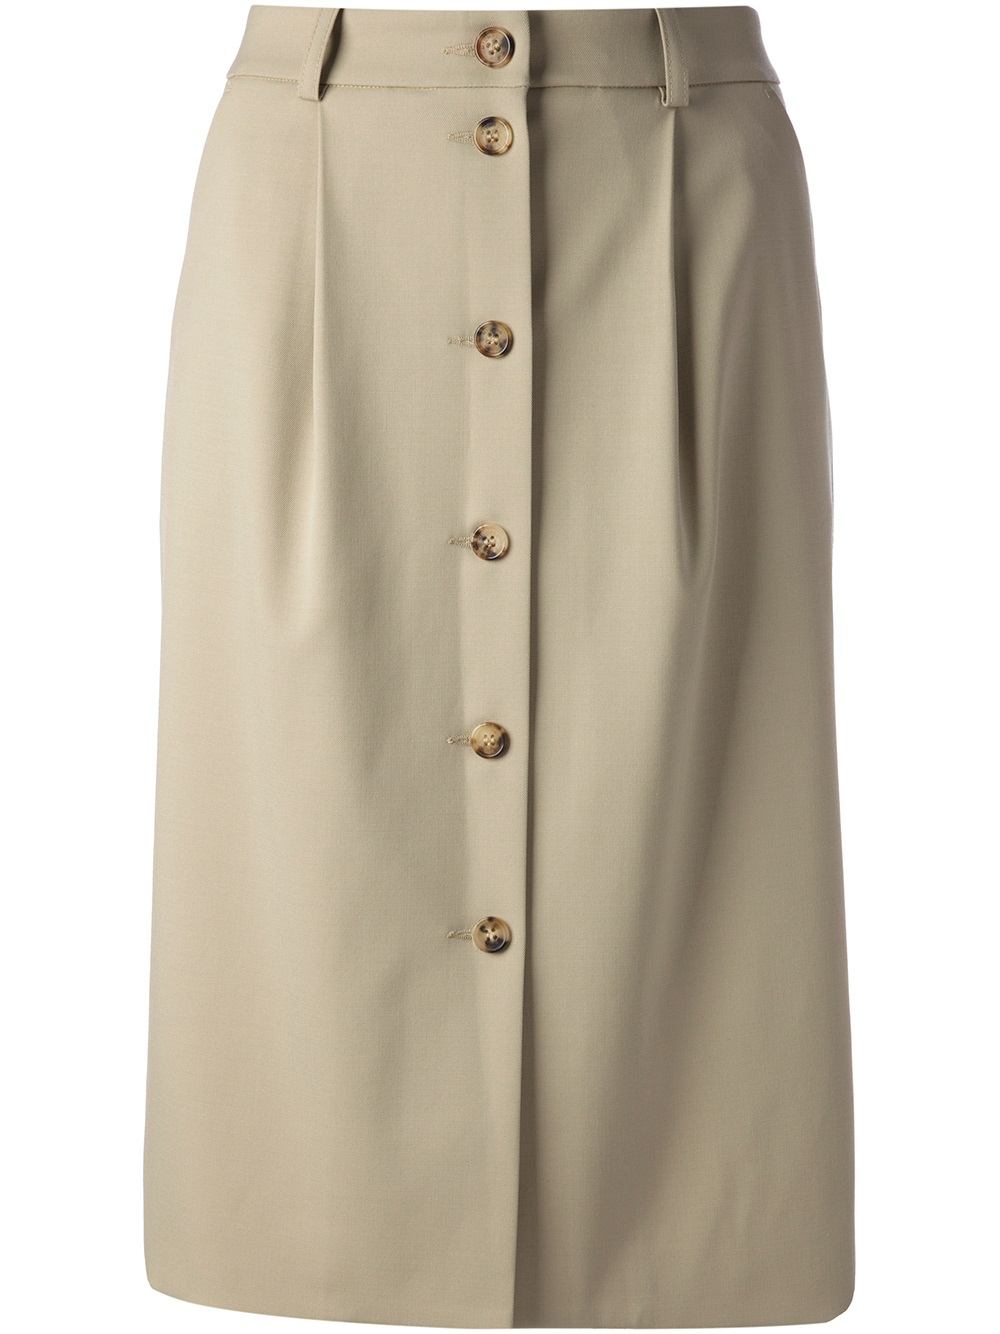 Lyst - Michael Kors Button Fastening Skirt in Natural